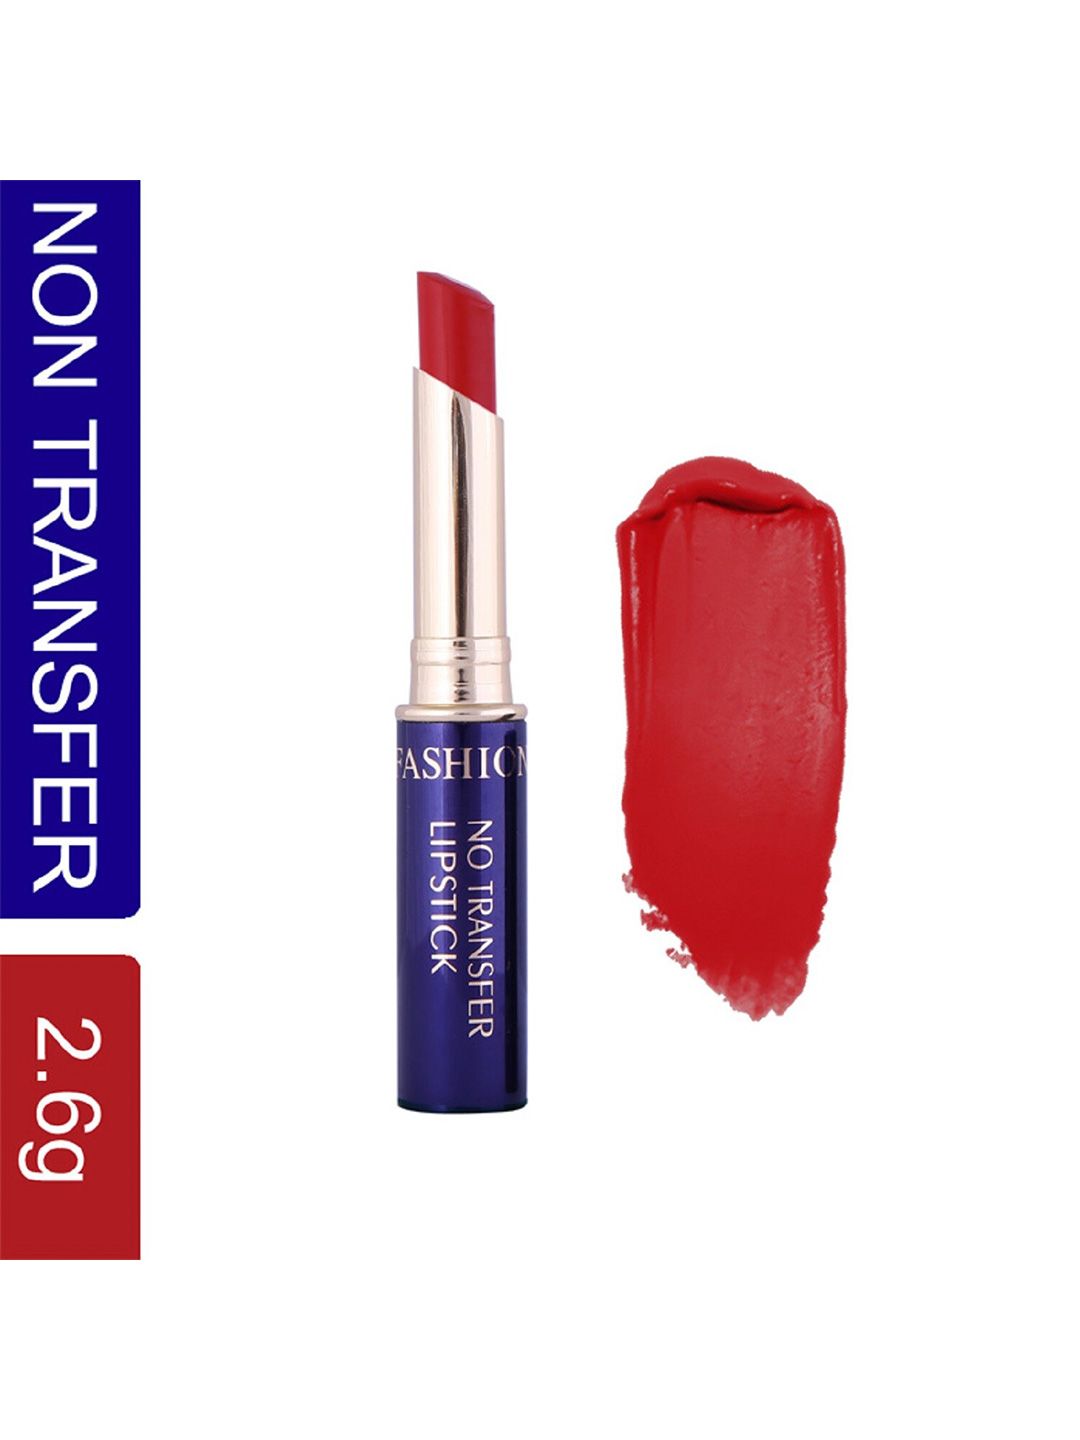 Fashion Colour No Transfer Matte Waterproof Lipstick 2.6 g - Lotus Red 07 Price in India